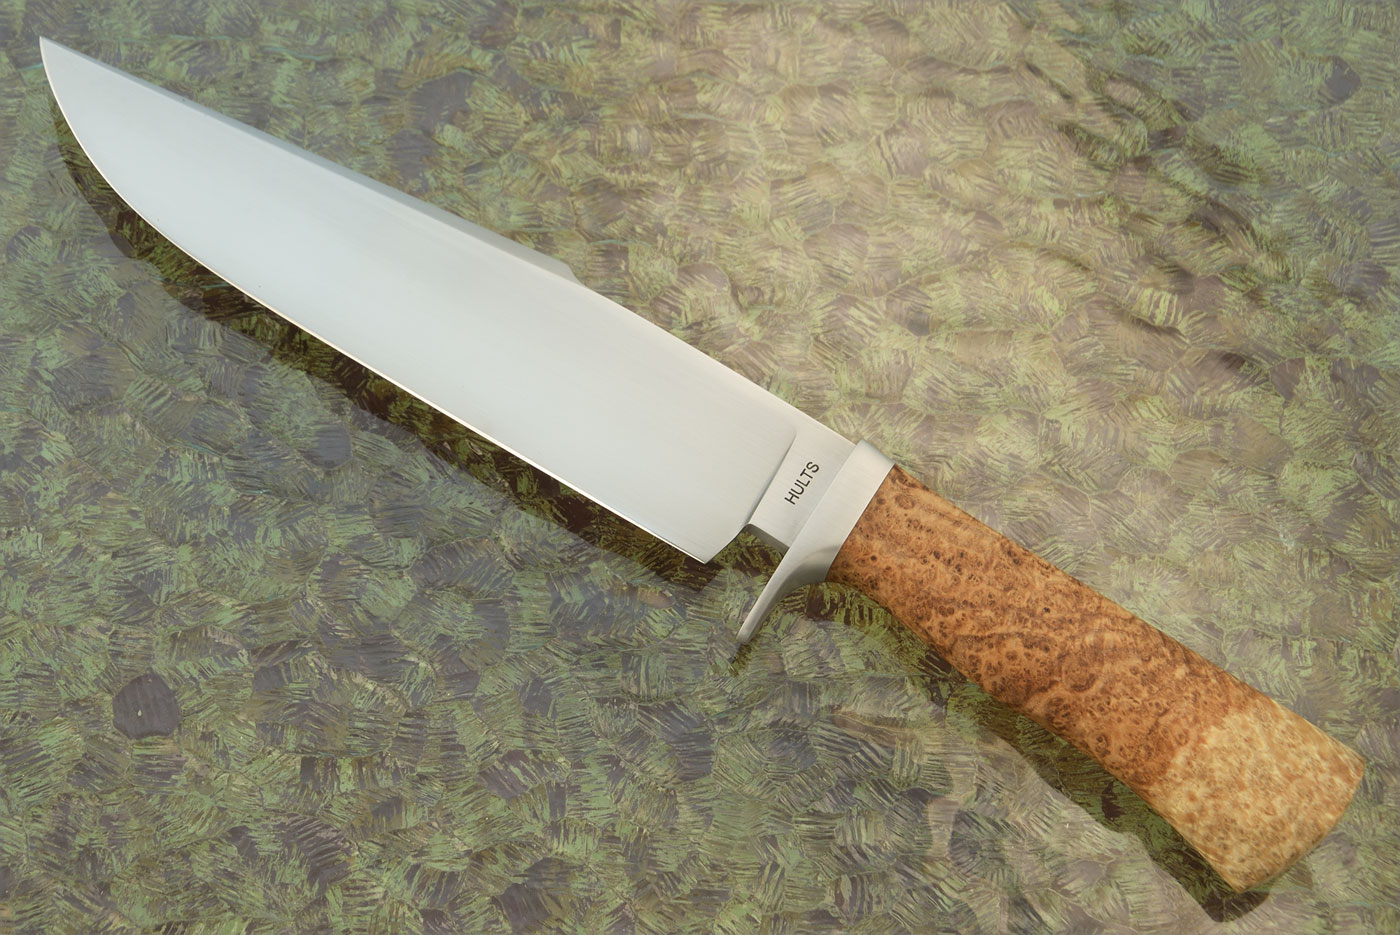 Raised Clip Camp Knife with Black Ash Burl<br><i>Journeyman Smith Test Knife</i>